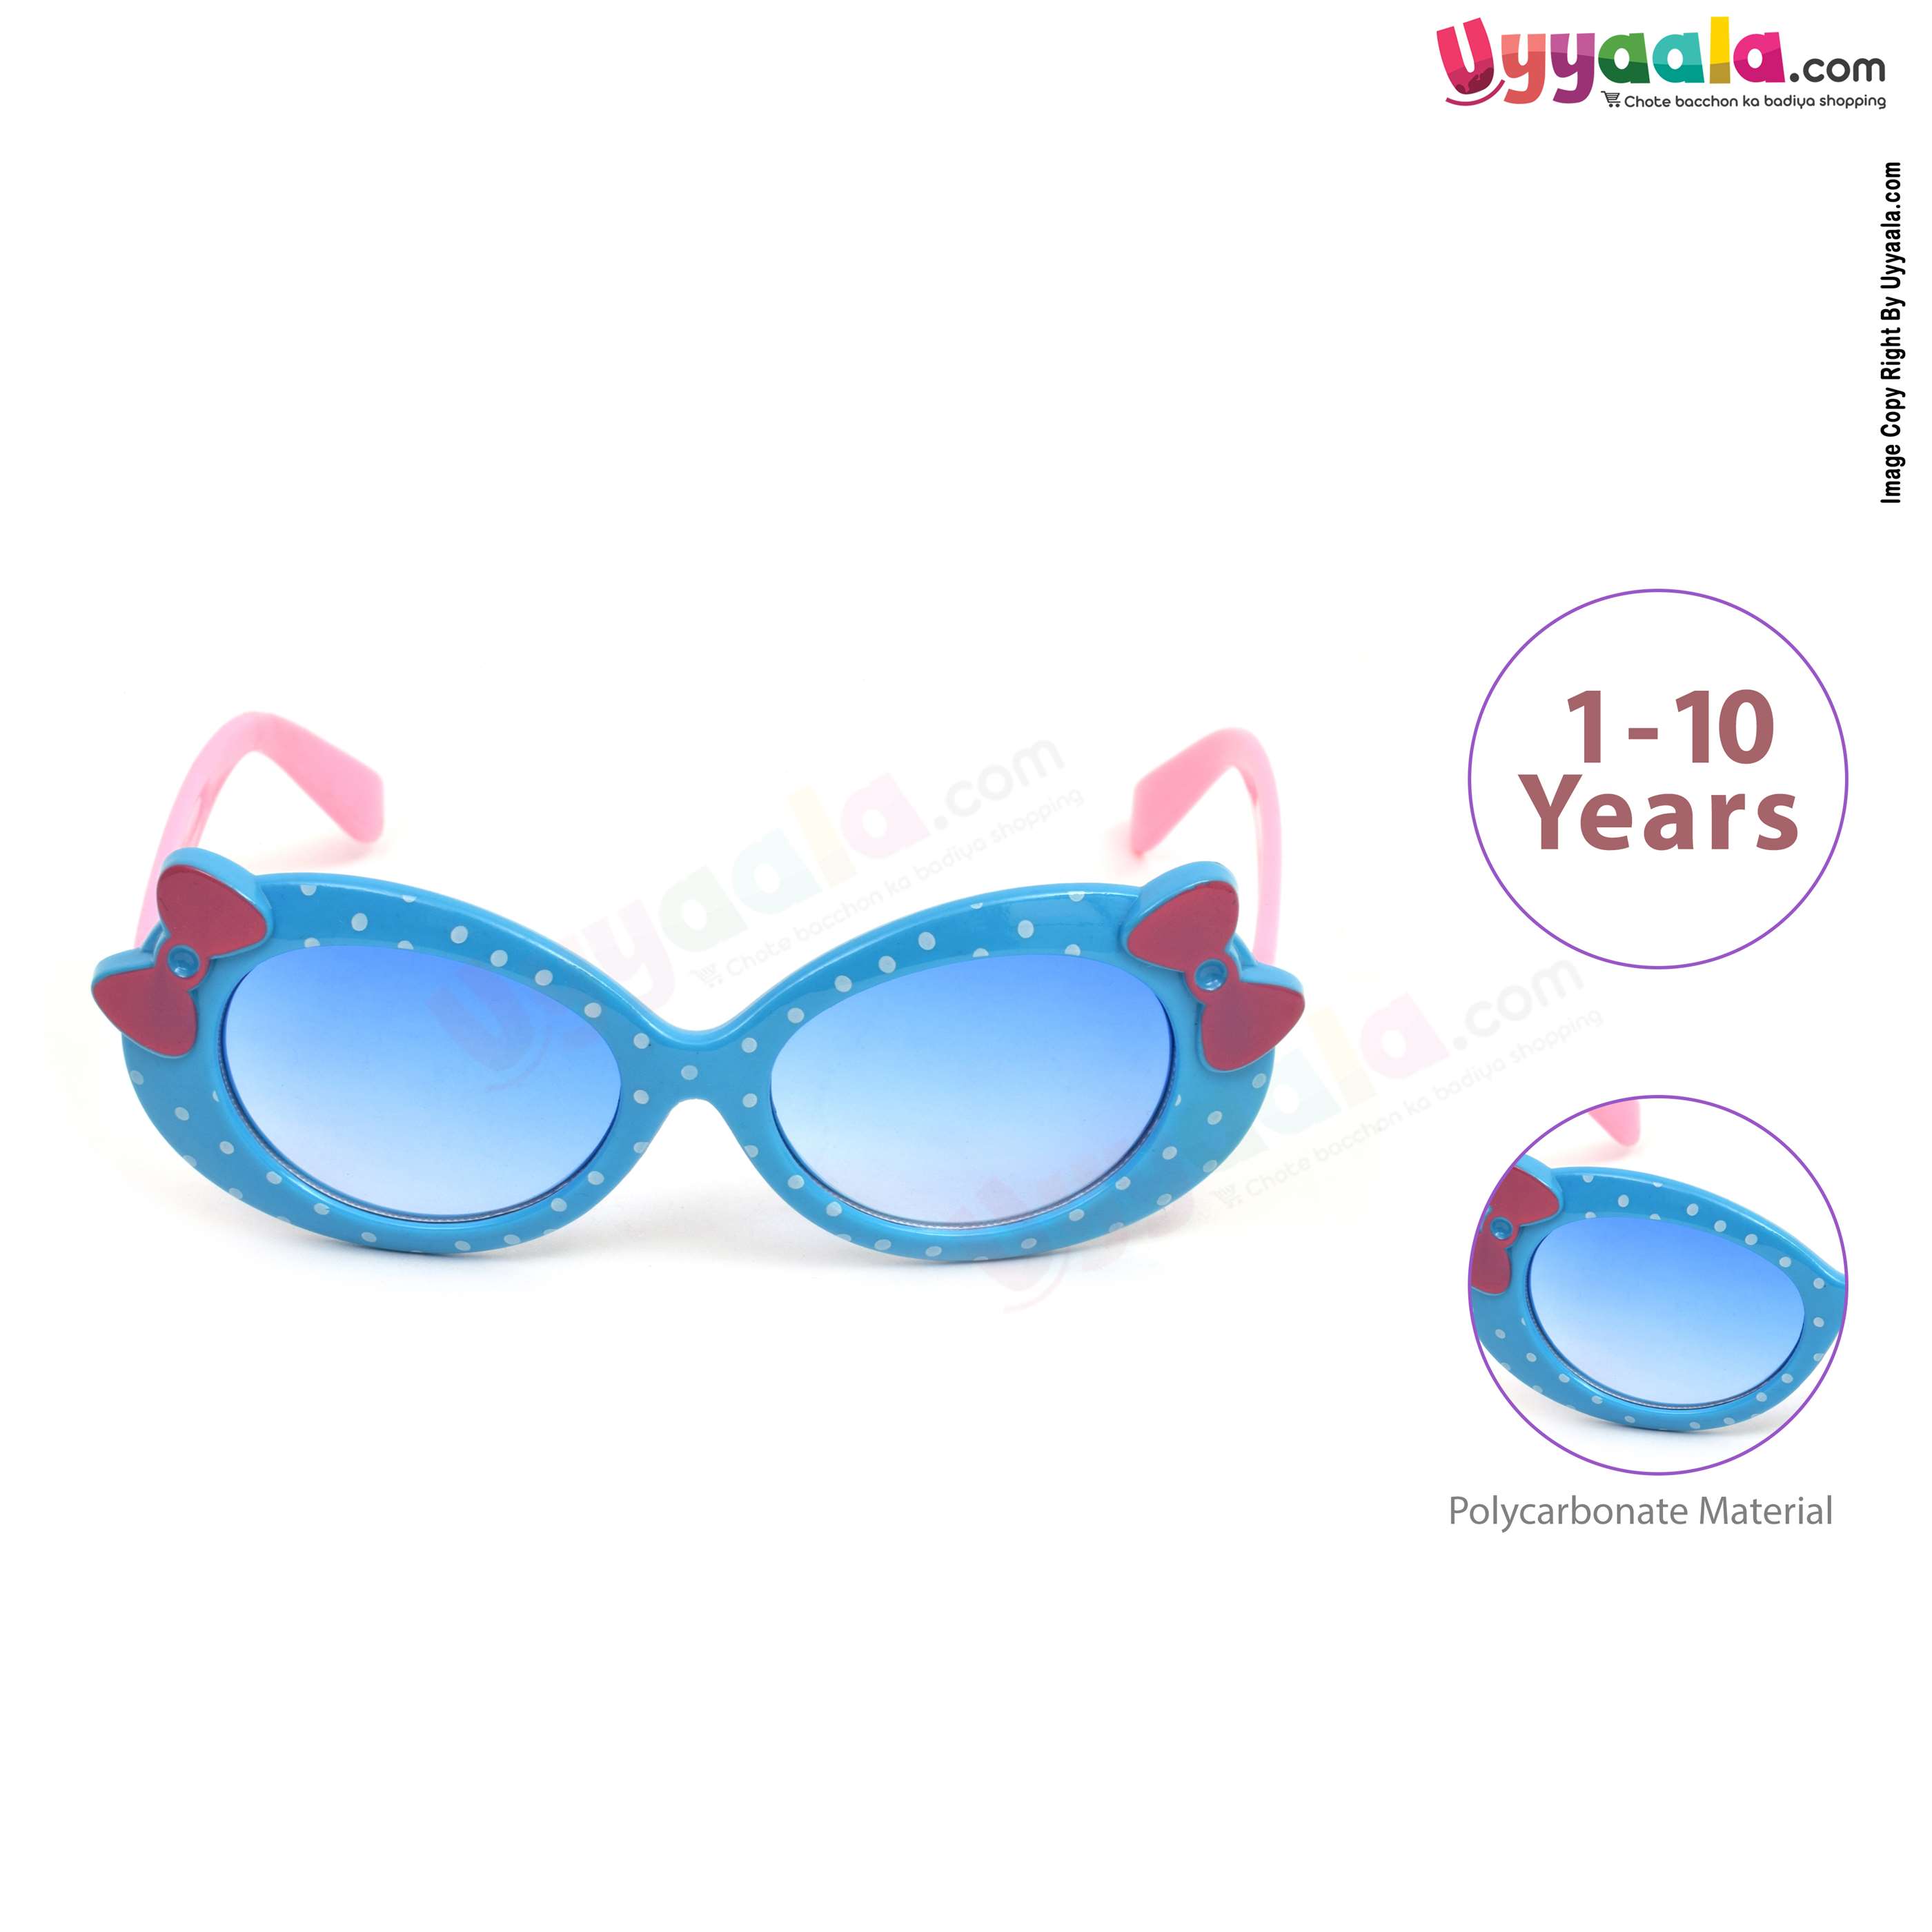 Stylish cat eye shaped tinted sunglasses for kids